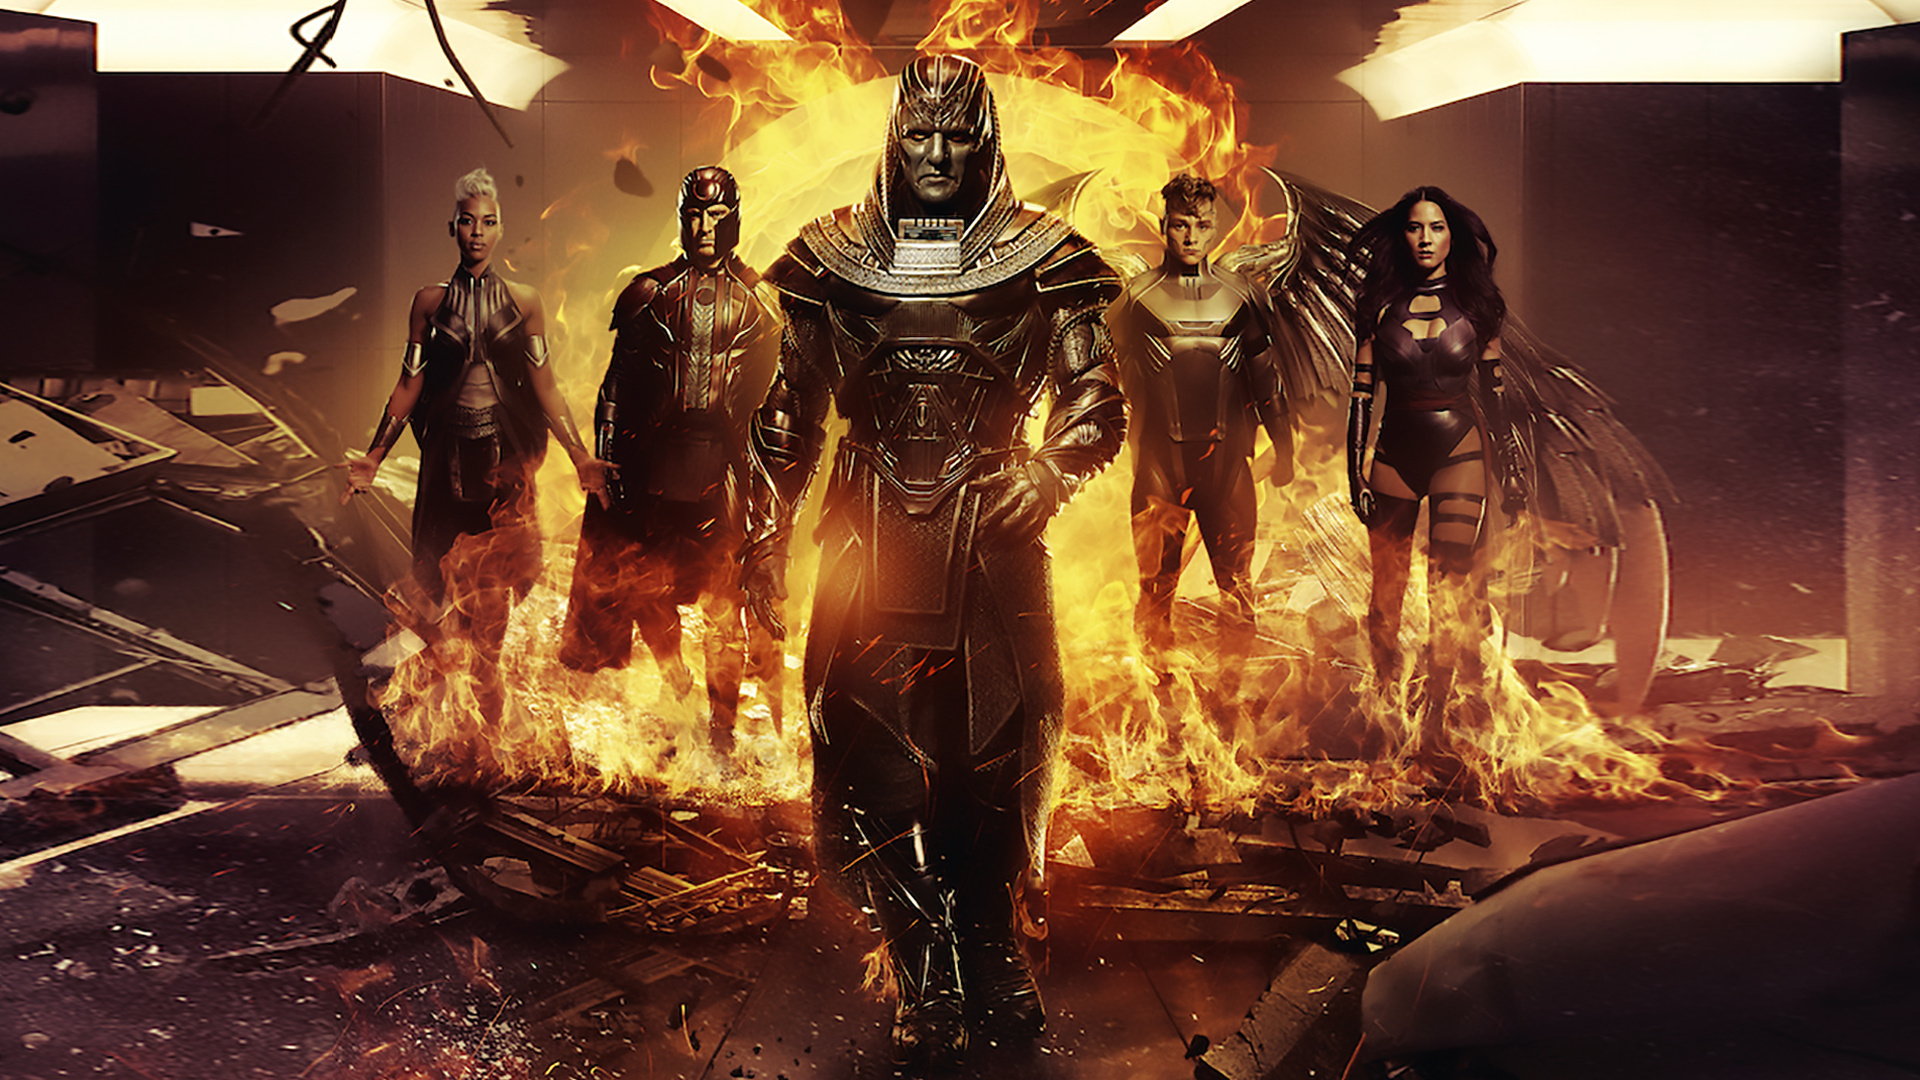 X-men apocalypse wallpaper, HD background image, Mutant showdown, Action-packed, 1920x1080 Full HD Desktop